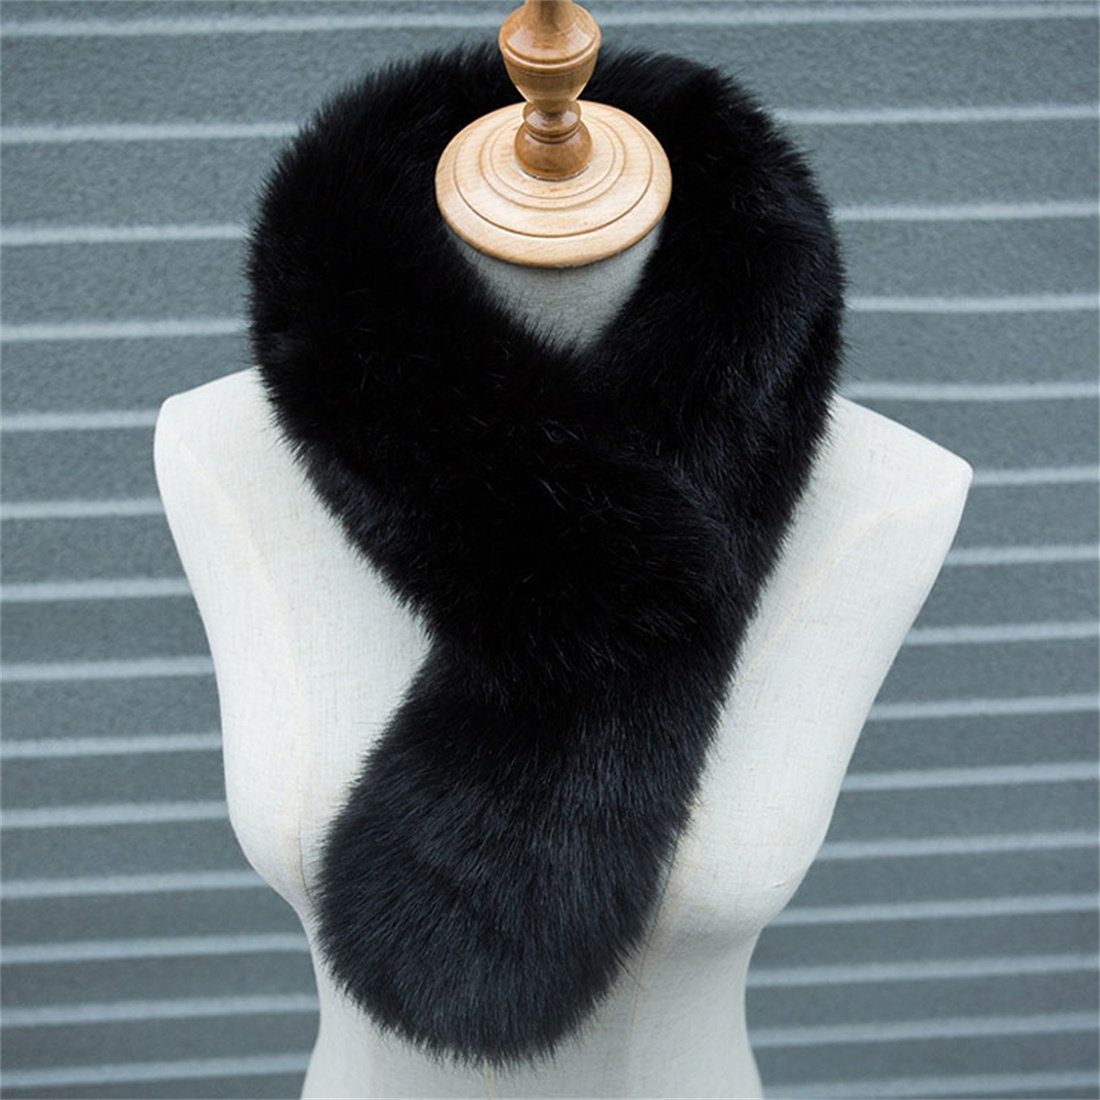 Schwarz Schal,Nachahmung warm Modeschal einfarbigSchal DÖRÖY Plüsch Pelz verdickt Winter Damen